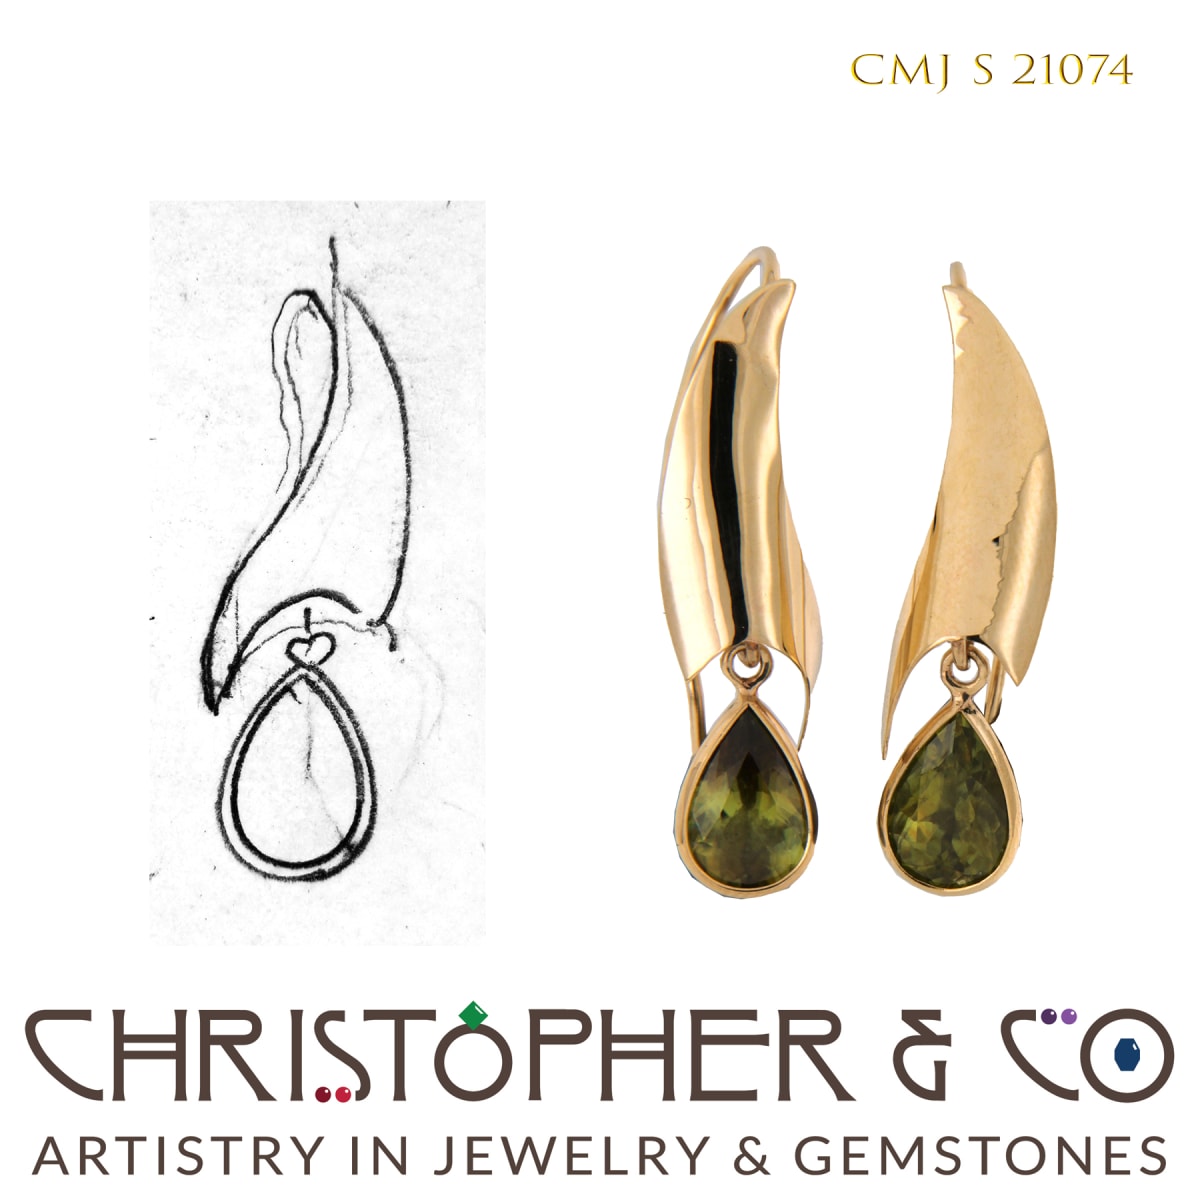 CMJ S 21074 Gold Earring Pair designed by Christopher M. Jupp set with Sphene  Image: CMJ S 21074 Gold Earring Pair designed by Christopher M. Jupp set with Sphene